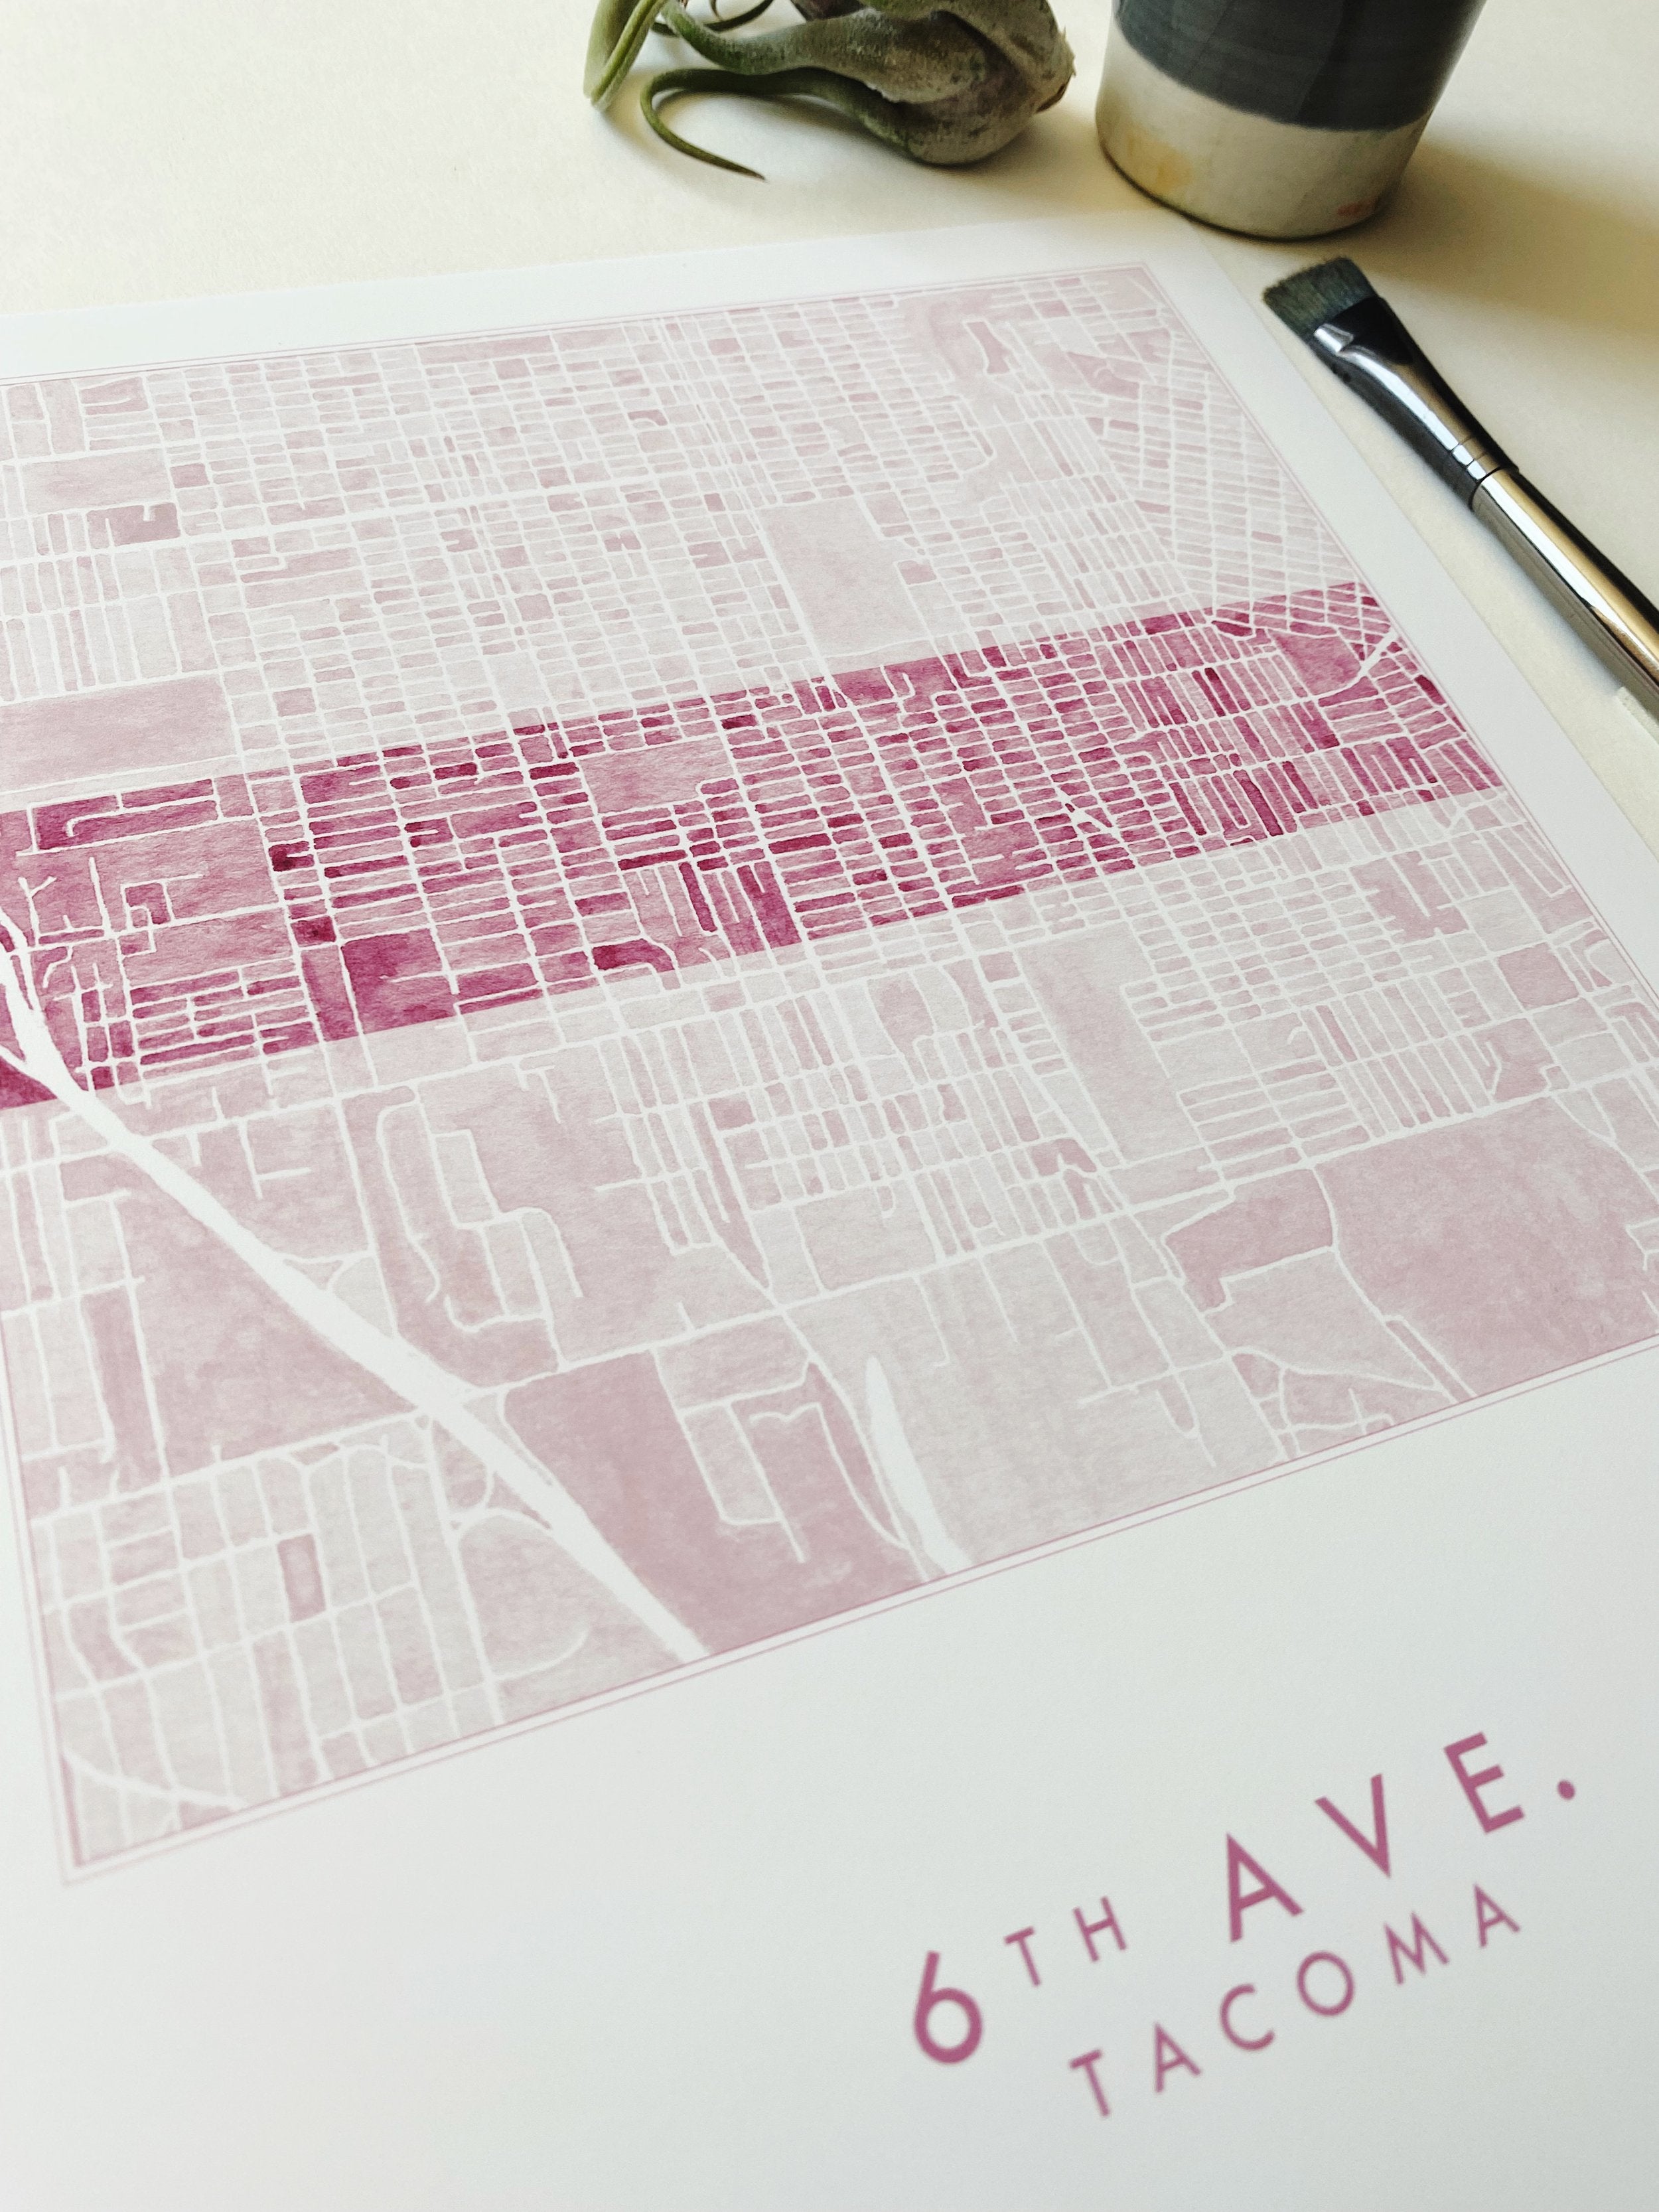 6th Avenue TACOMA Neighborhood Watercolor Map: PRINT